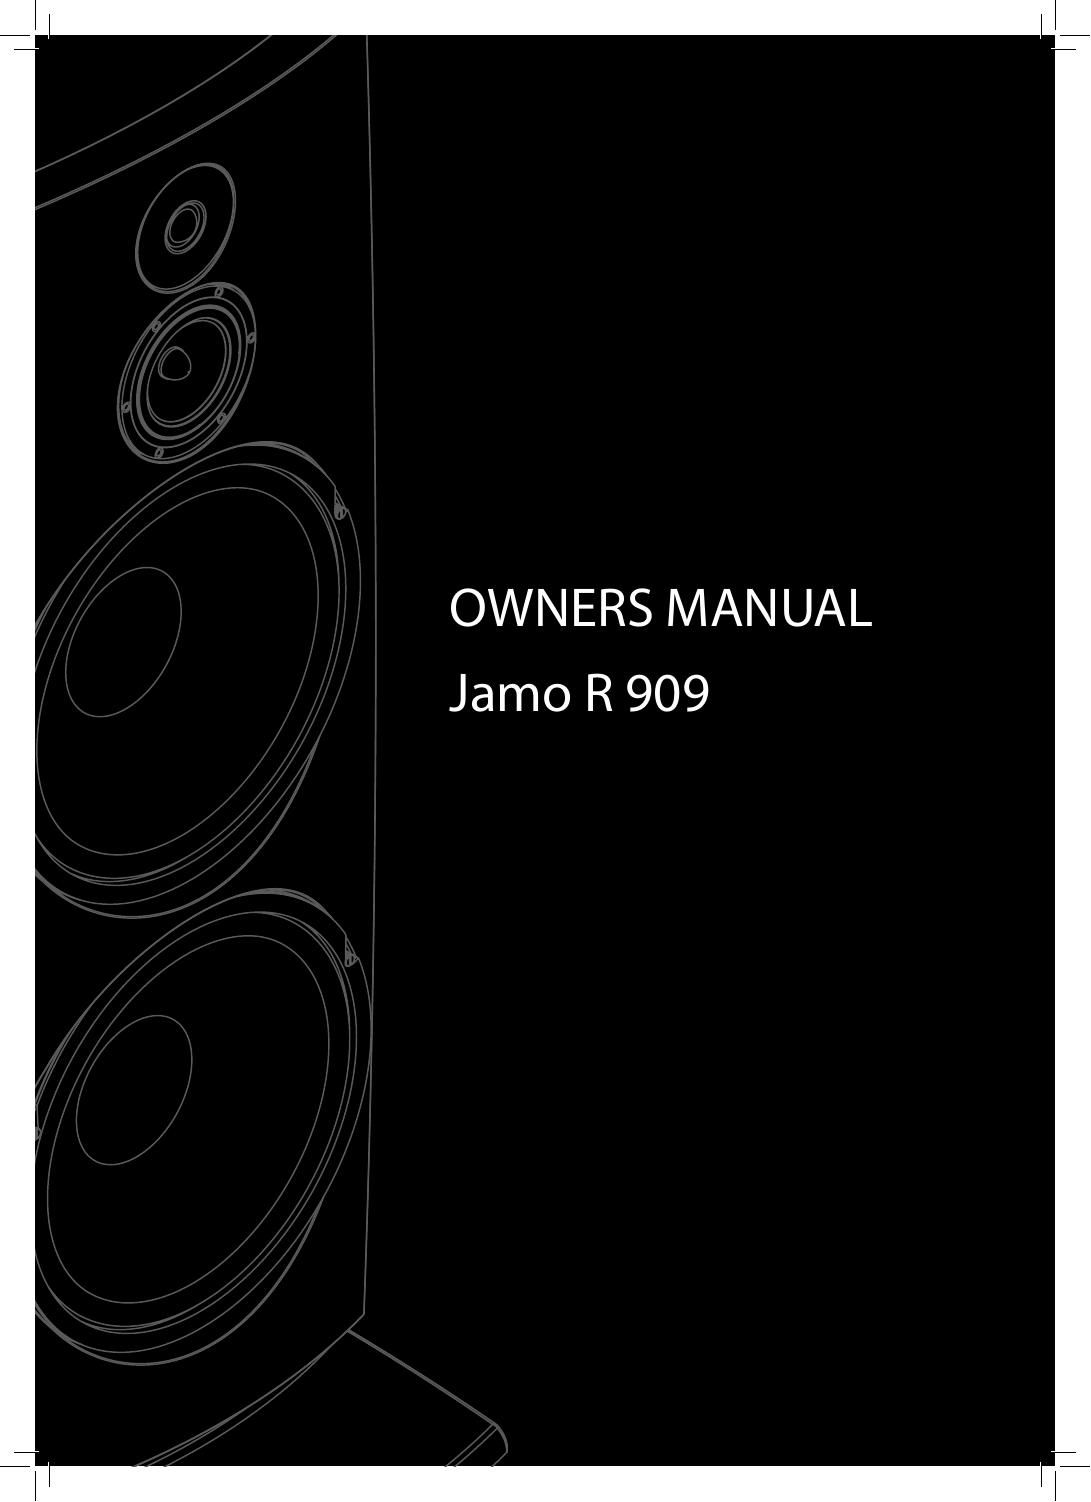 jamo r 909 owners manual